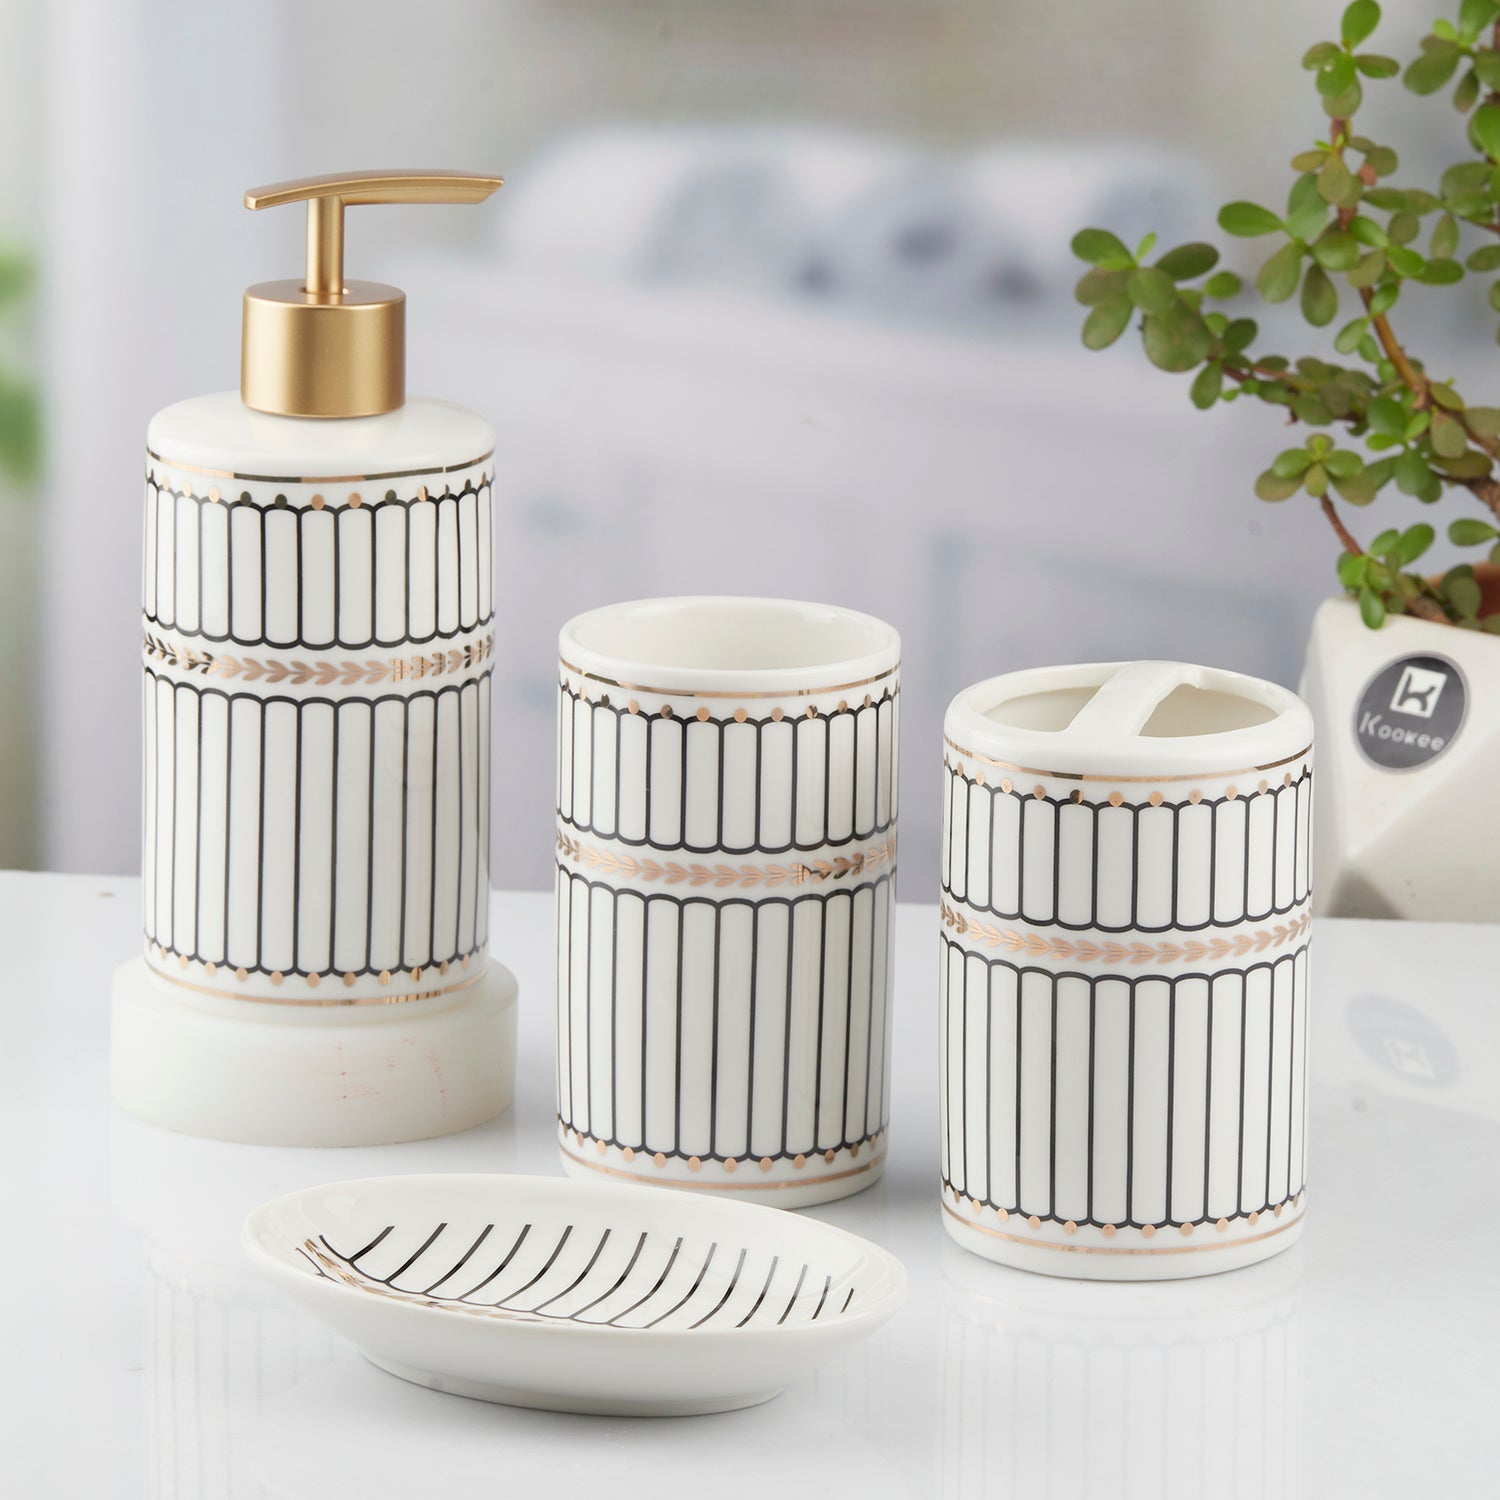 Ceramic Bathroom Accessories Set of 4 Bath Set with Soap Dispenser (9742)